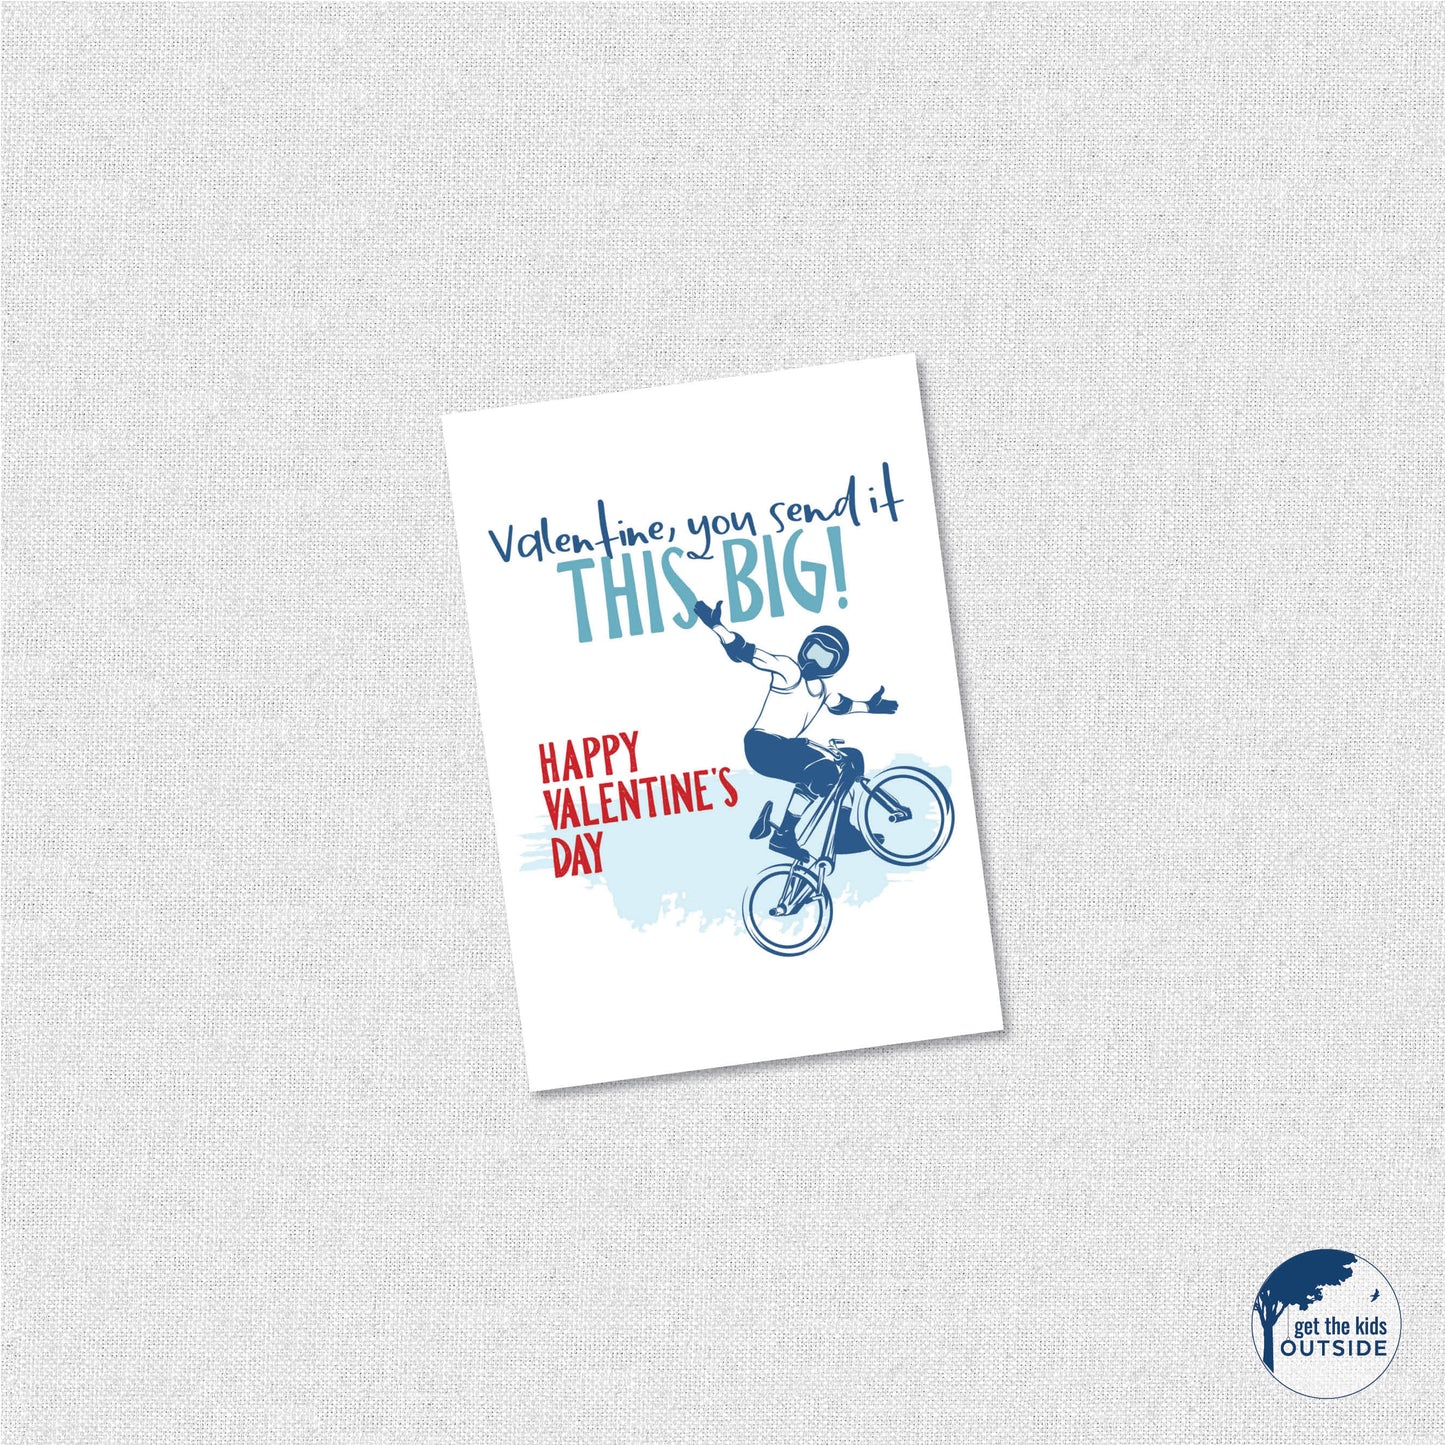 Valentines - MTB and BMX biking - printed